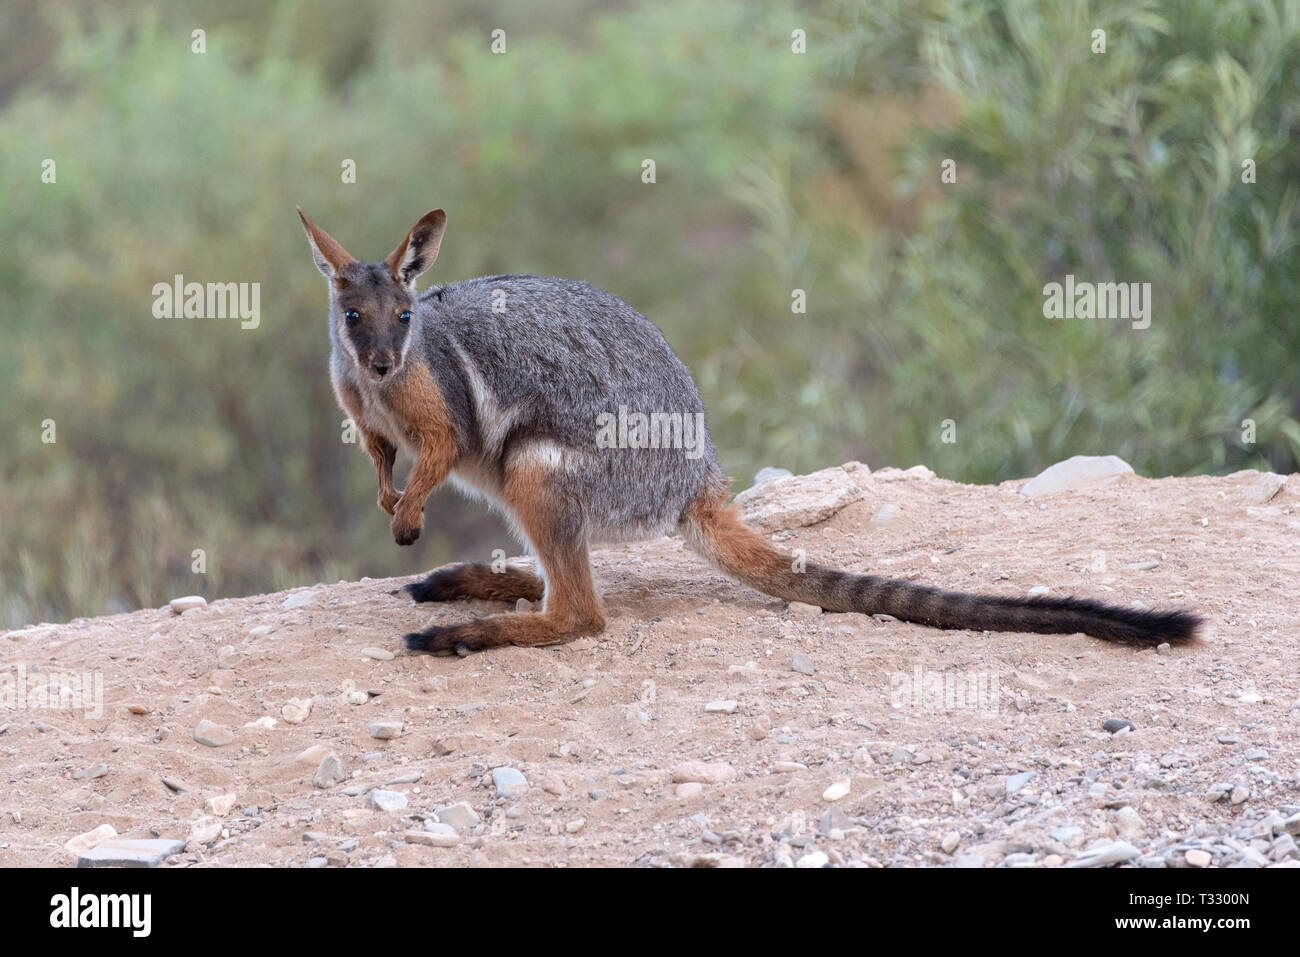 Giallo footed rock wallaby e la sua coda striata. Arkaroola, SA, Australia. Foto Stock